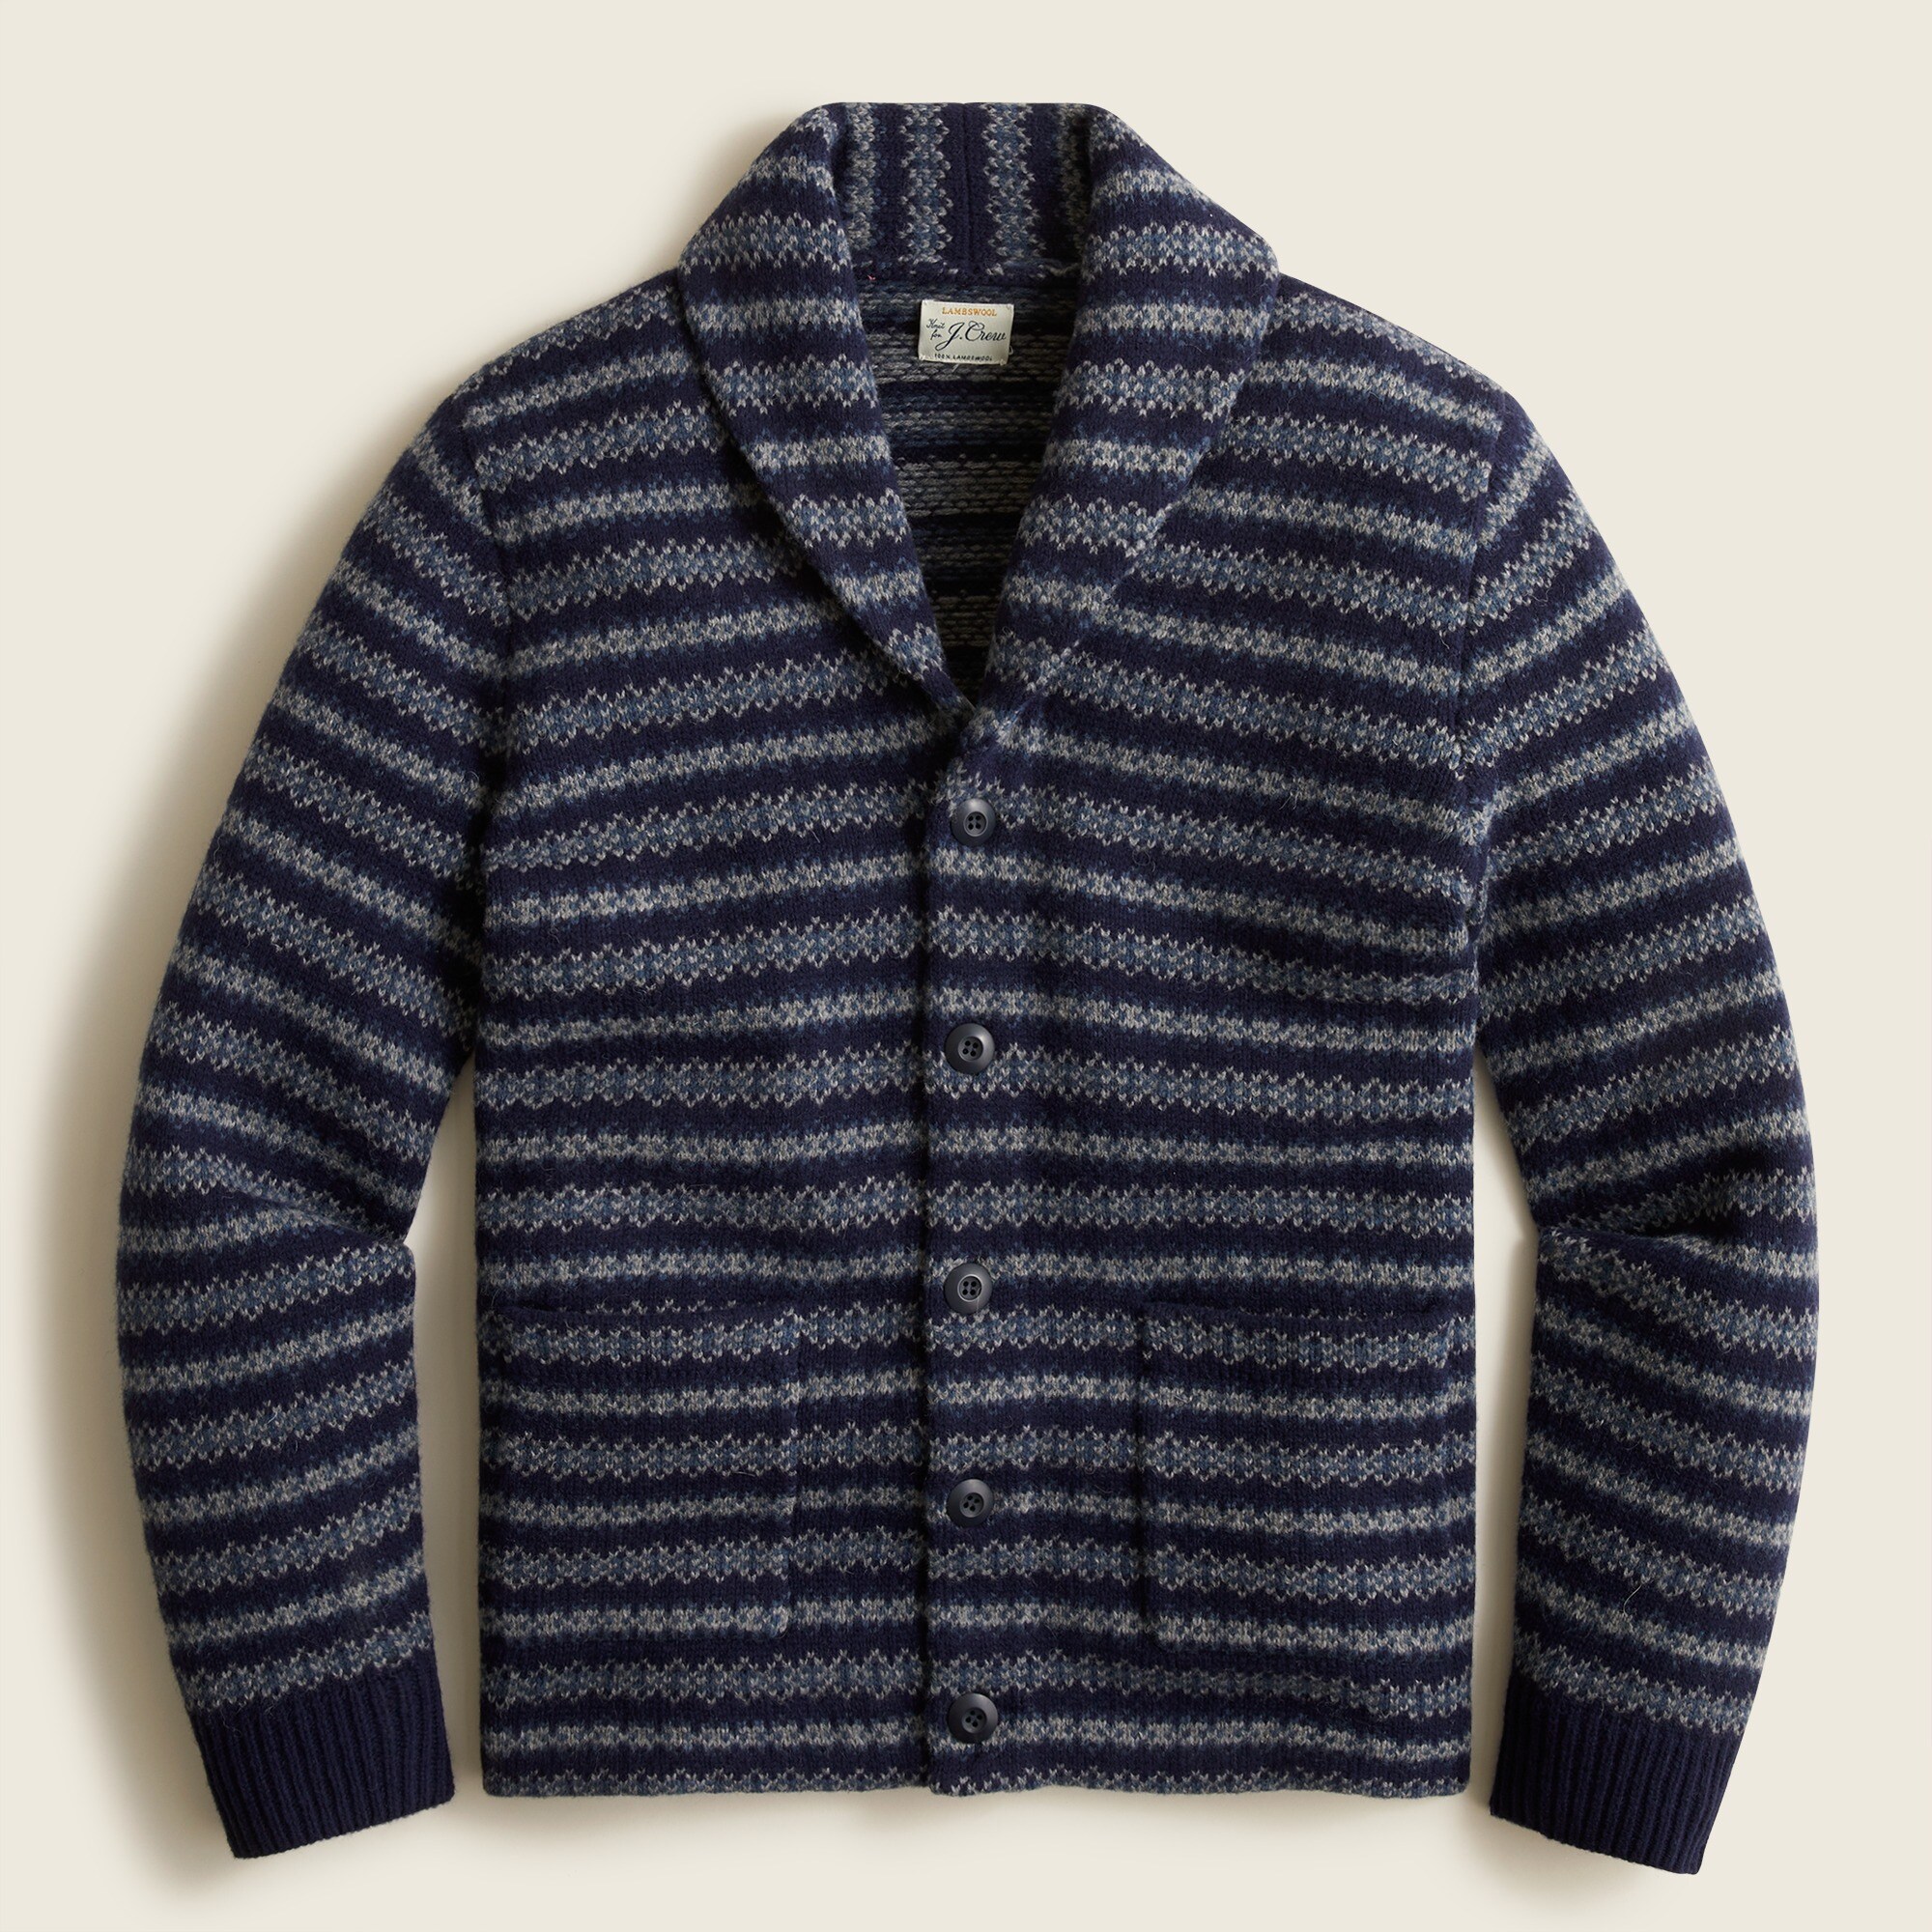 J.Crew: Fair Isle Lambswool Cardigan Sweater For Men